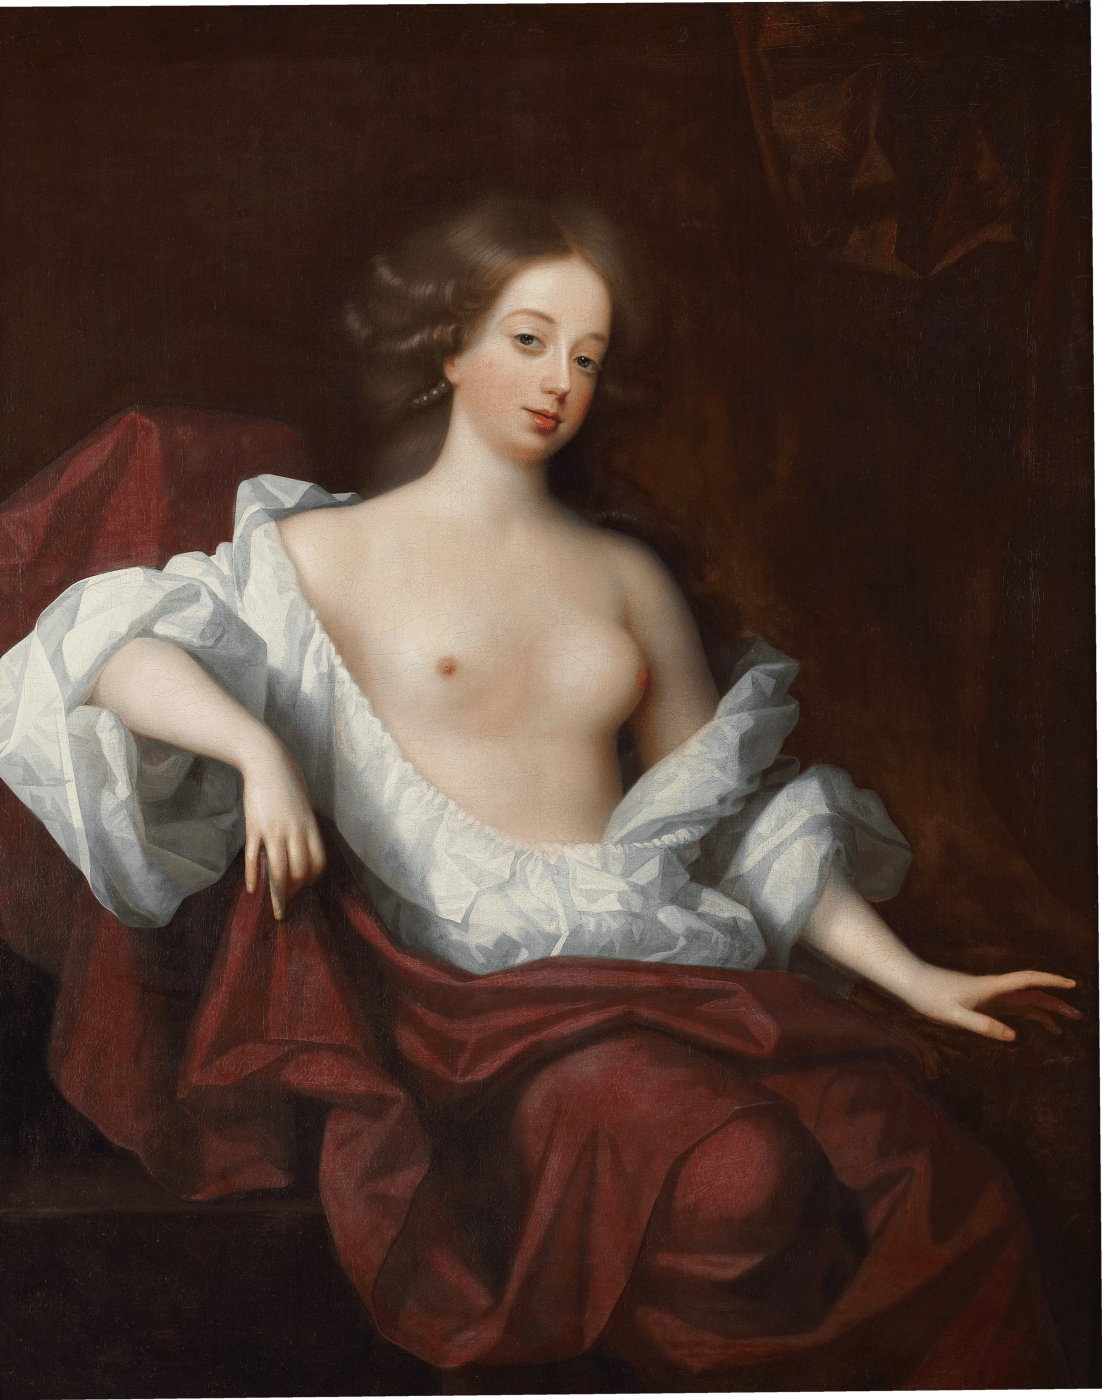 Simon Verelst's portrait of Nell Gwyn, mistress to King Charles II